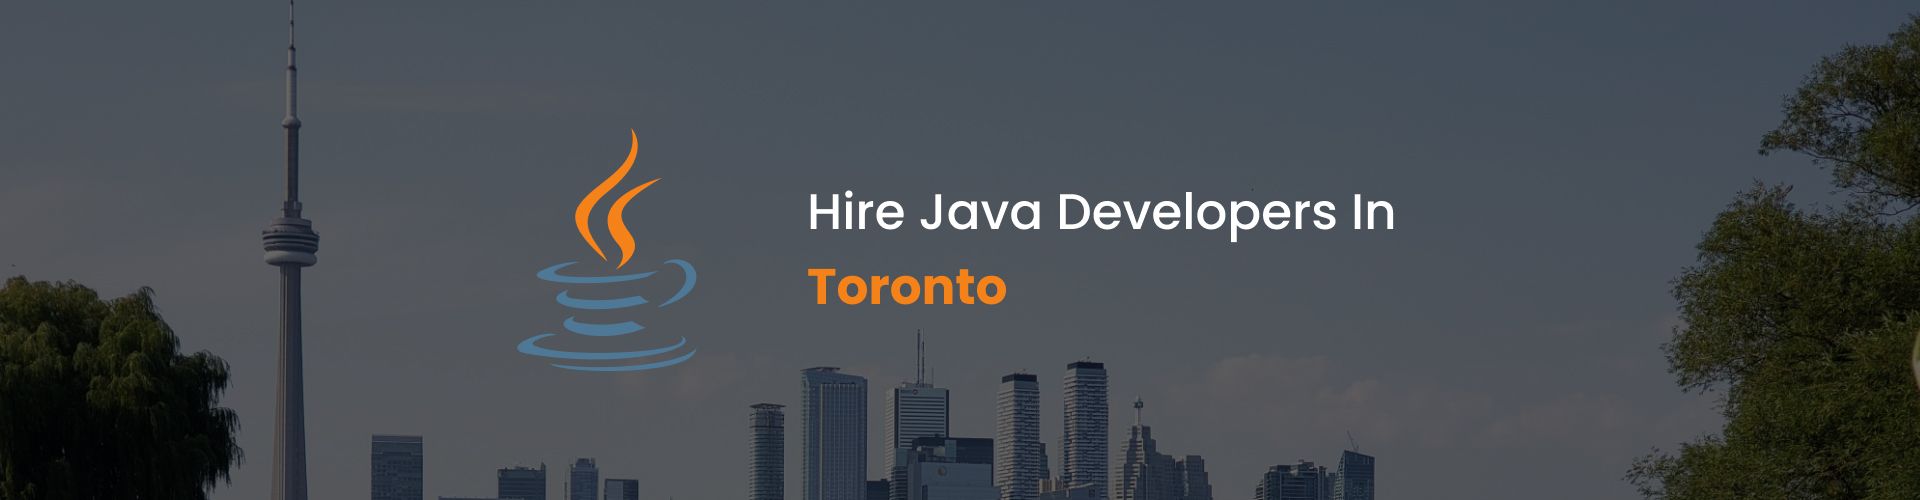 hire java developers in toronto